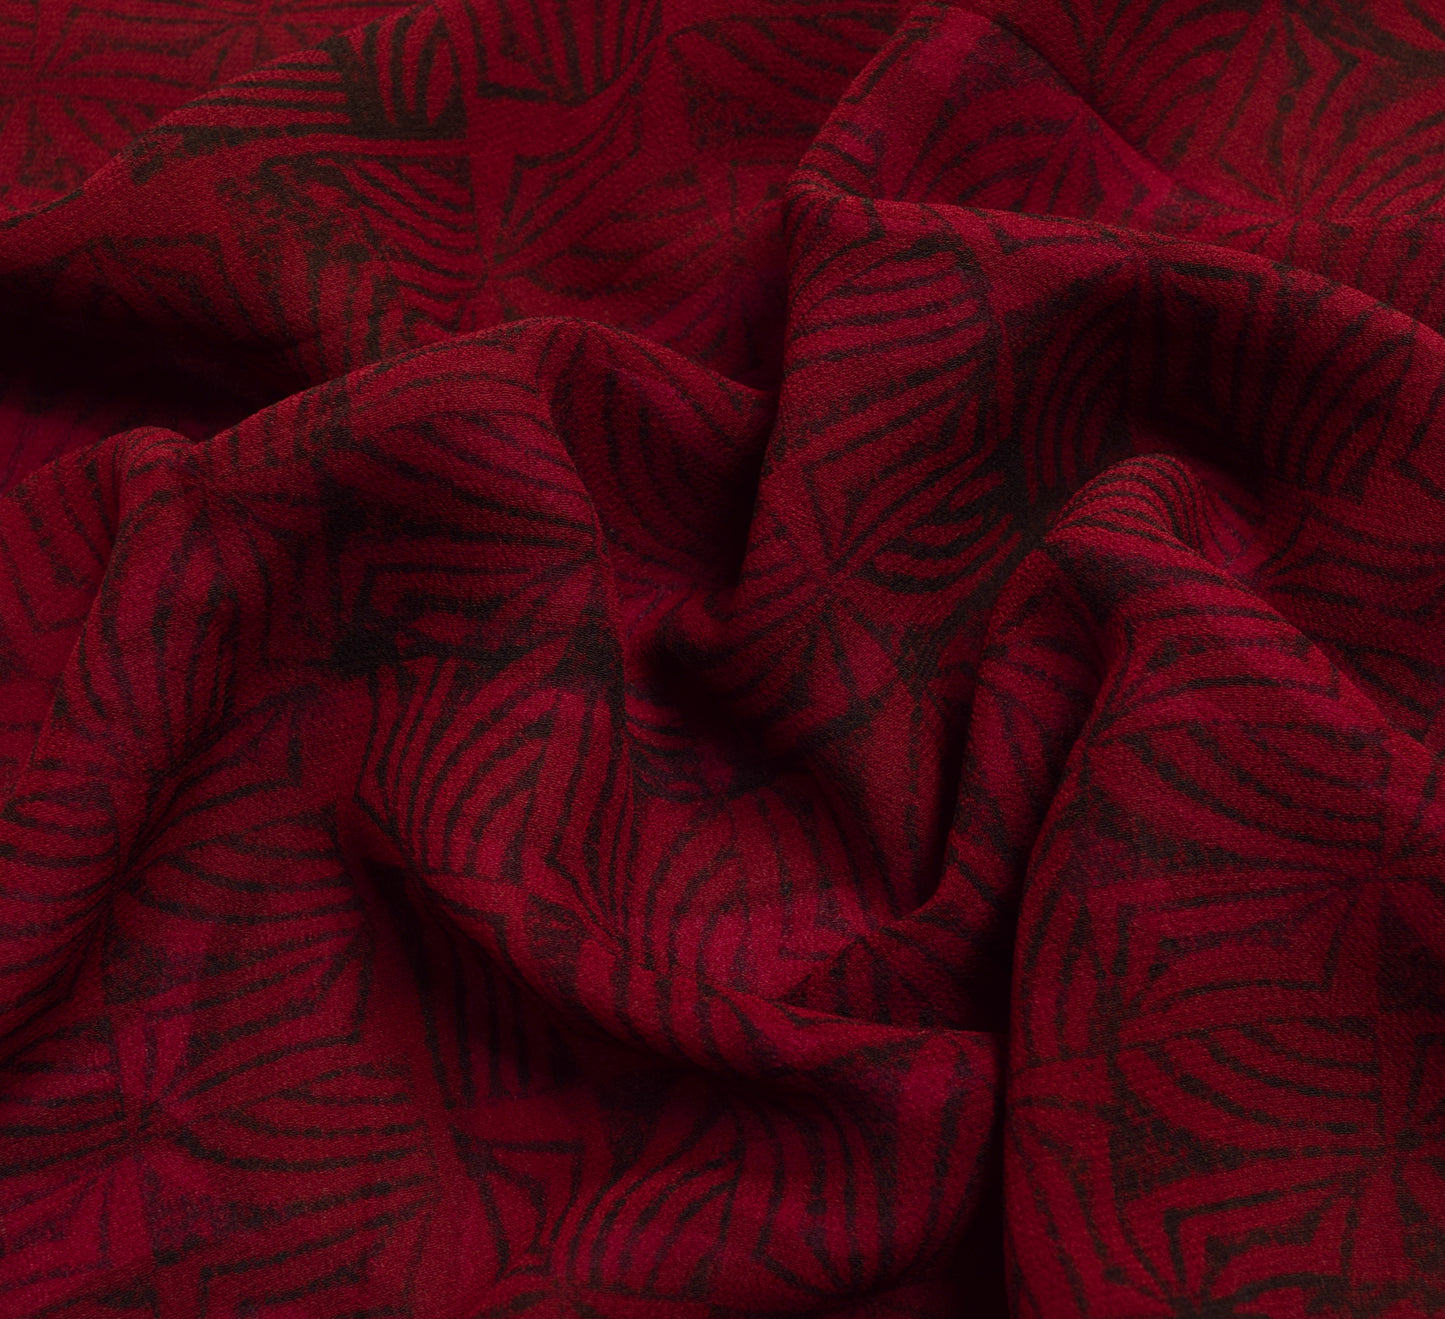 Sushila Vintage Saree 100% Pure Georgette Silk Printed Multi-Color Floral Fabric